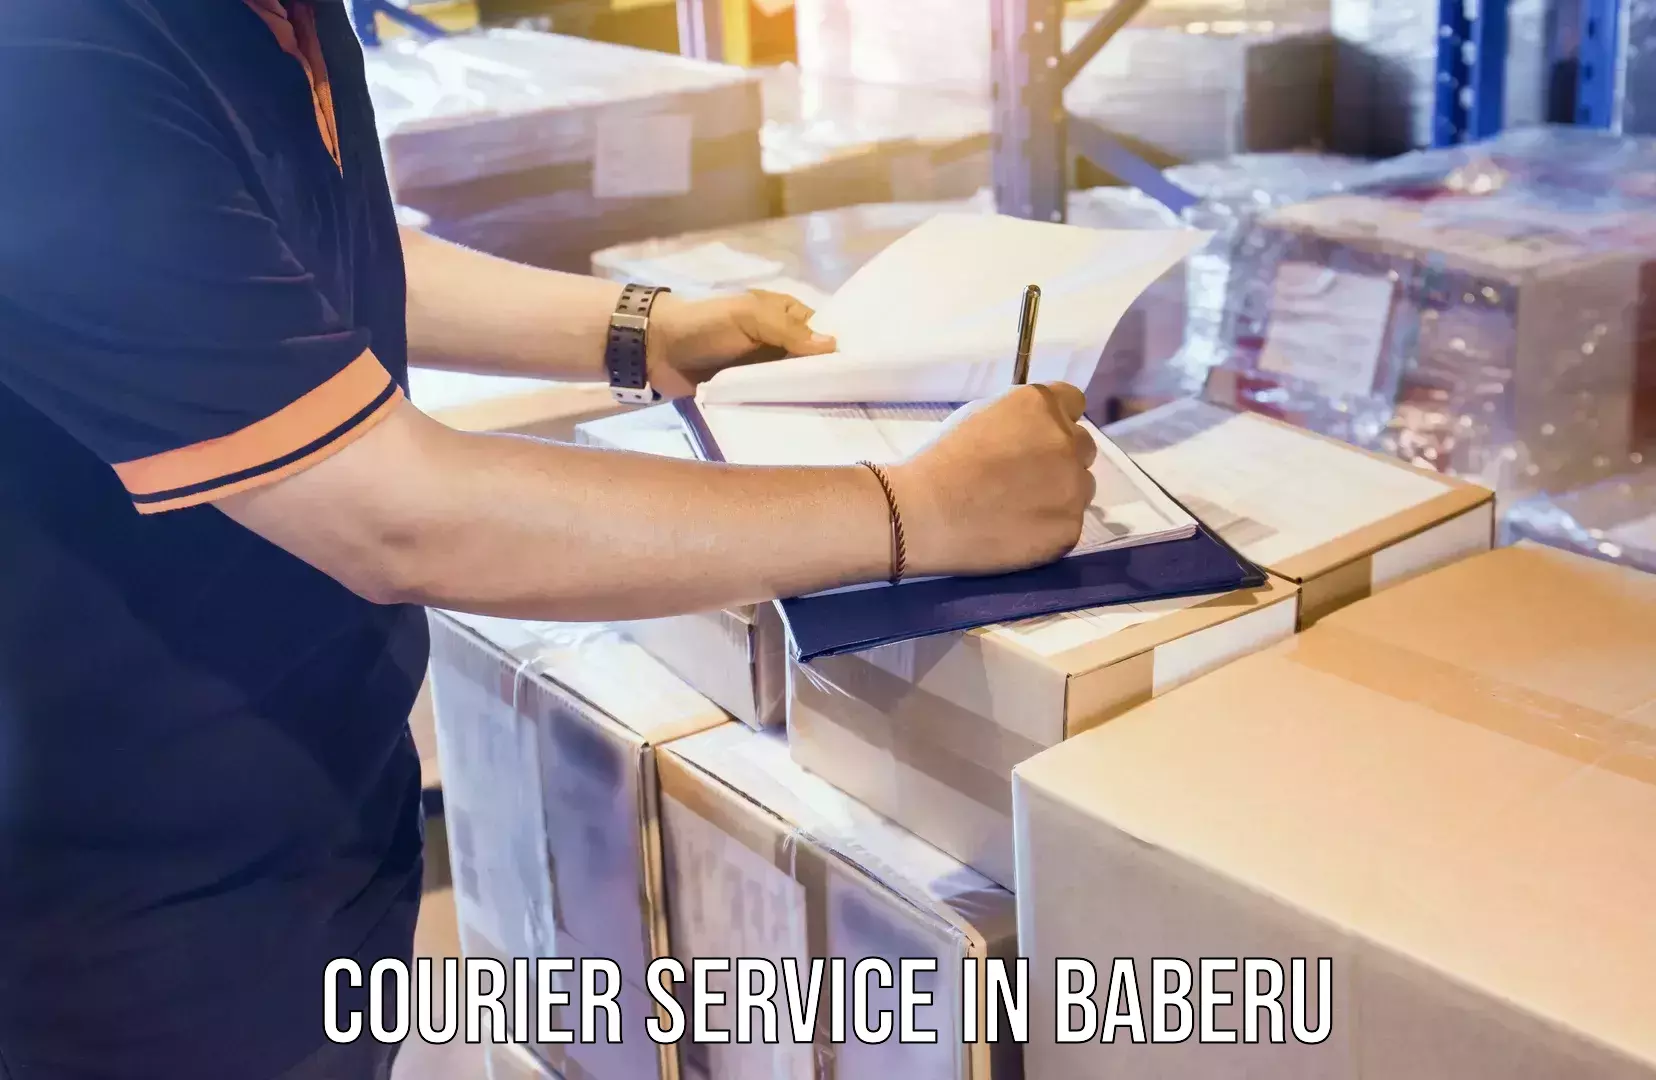 Fast delivery service in Baberu